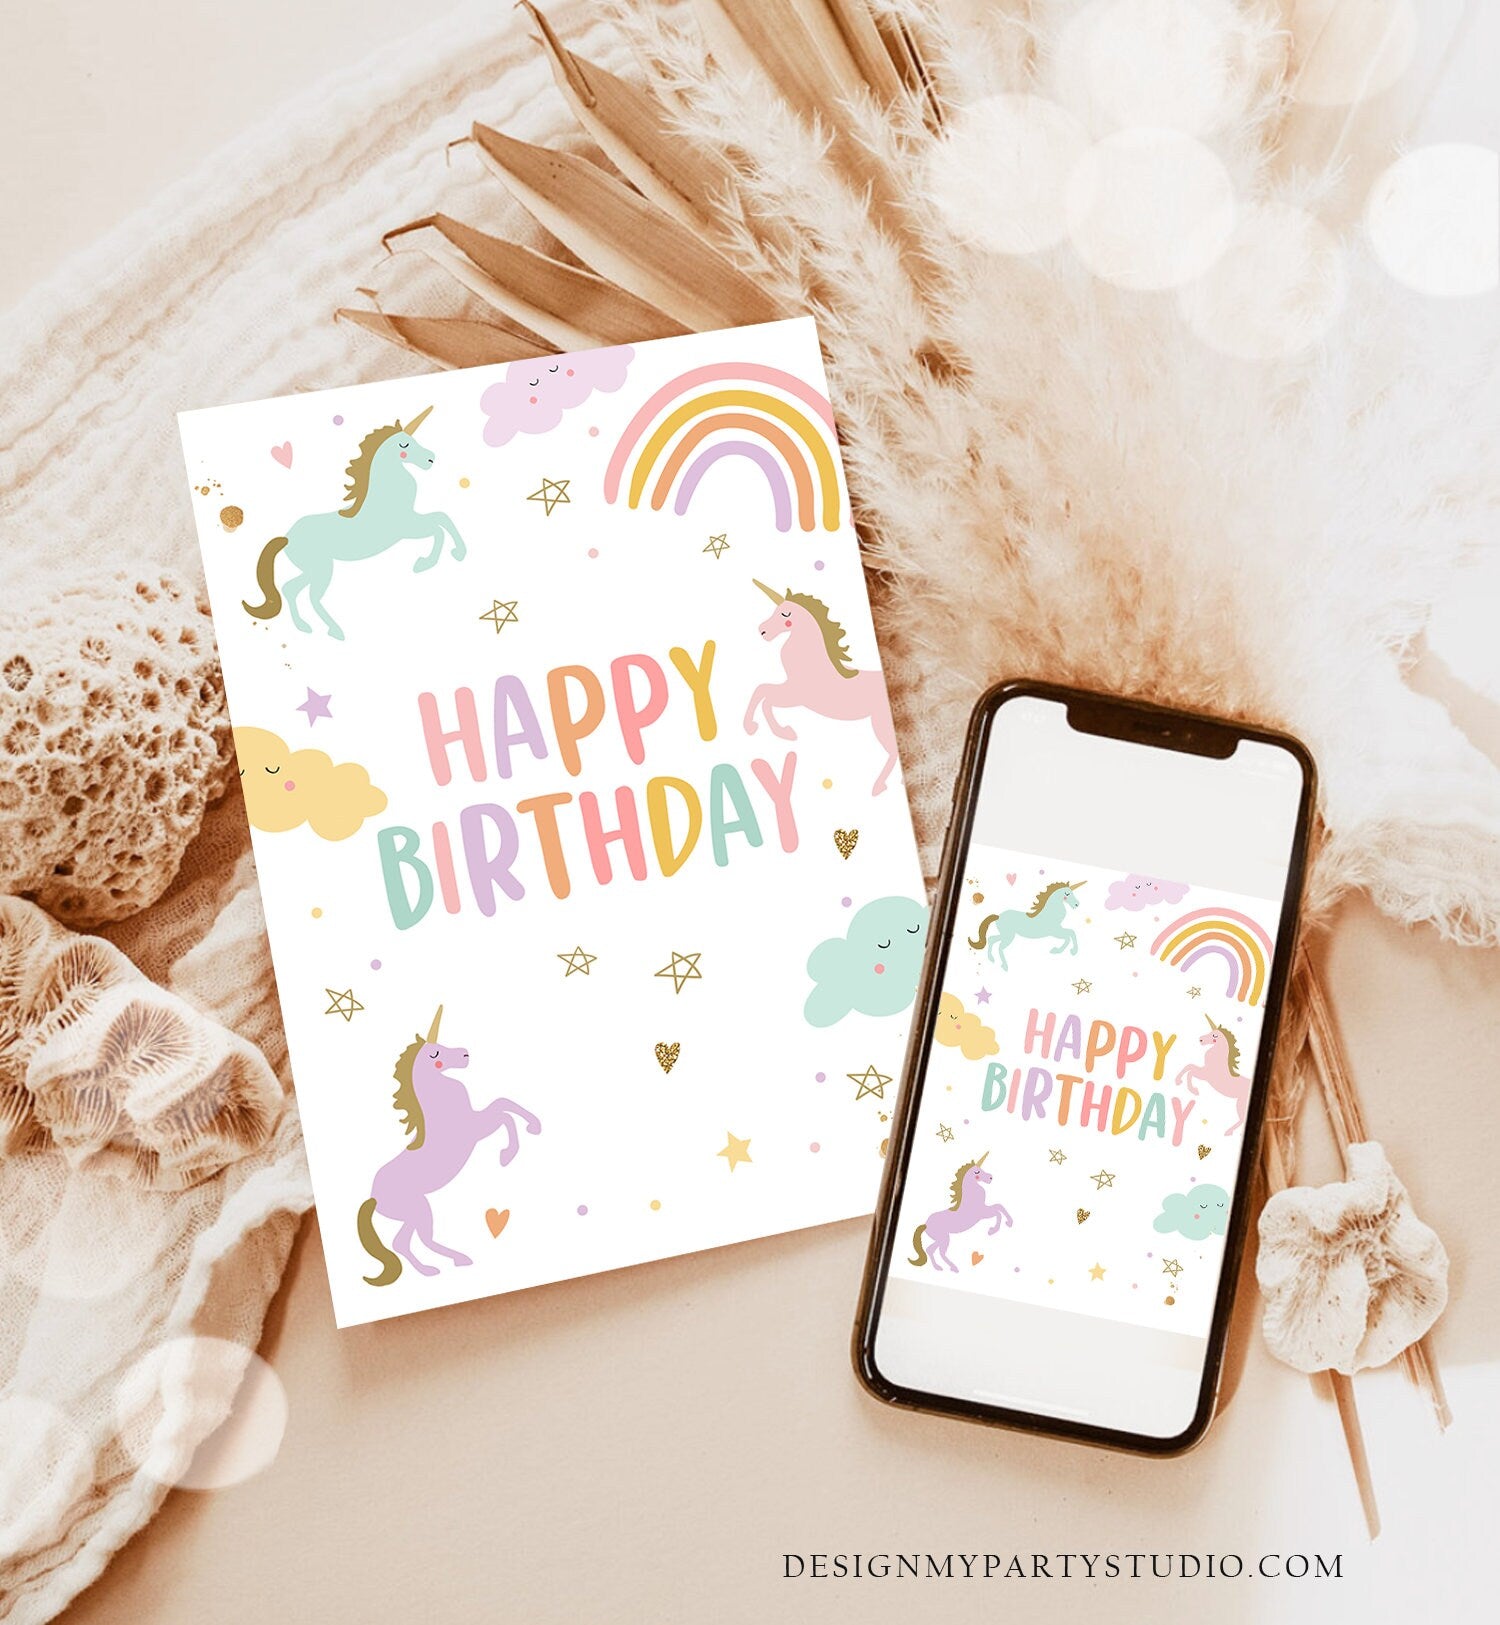 Happy Birthday Card Unicorn Birthday Greeting Card Unicorn Magical Rainbow Girl Daughter Friend 5x7 DIGITAL PRINTABLE Instant Download